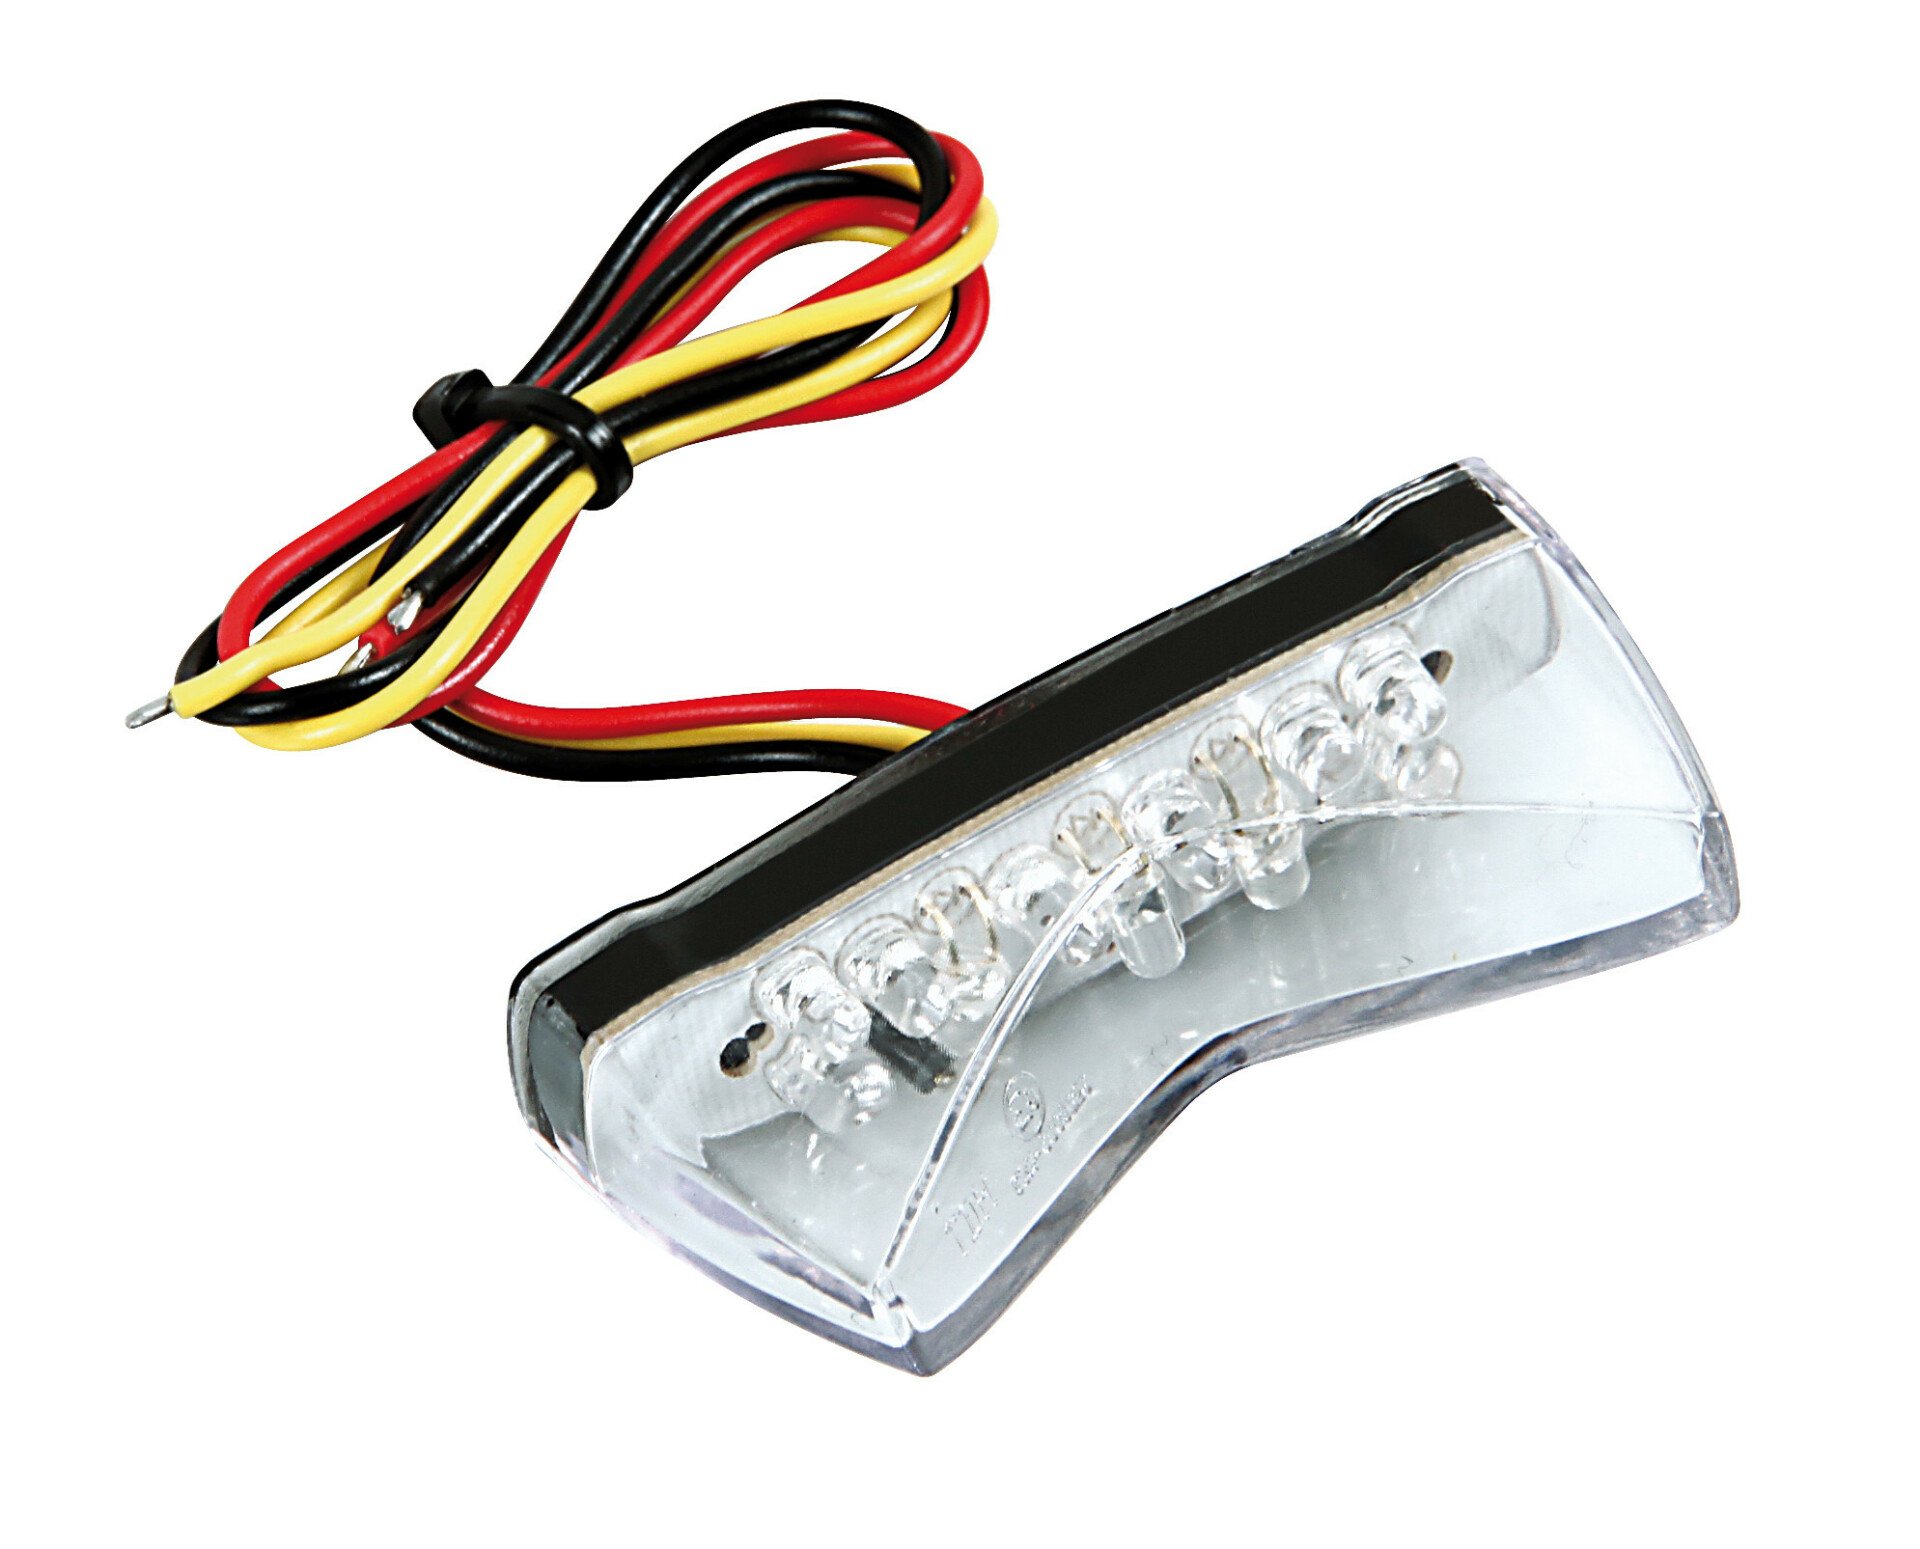 Lampa stop LED cu 3 functii Concept 12V thumb